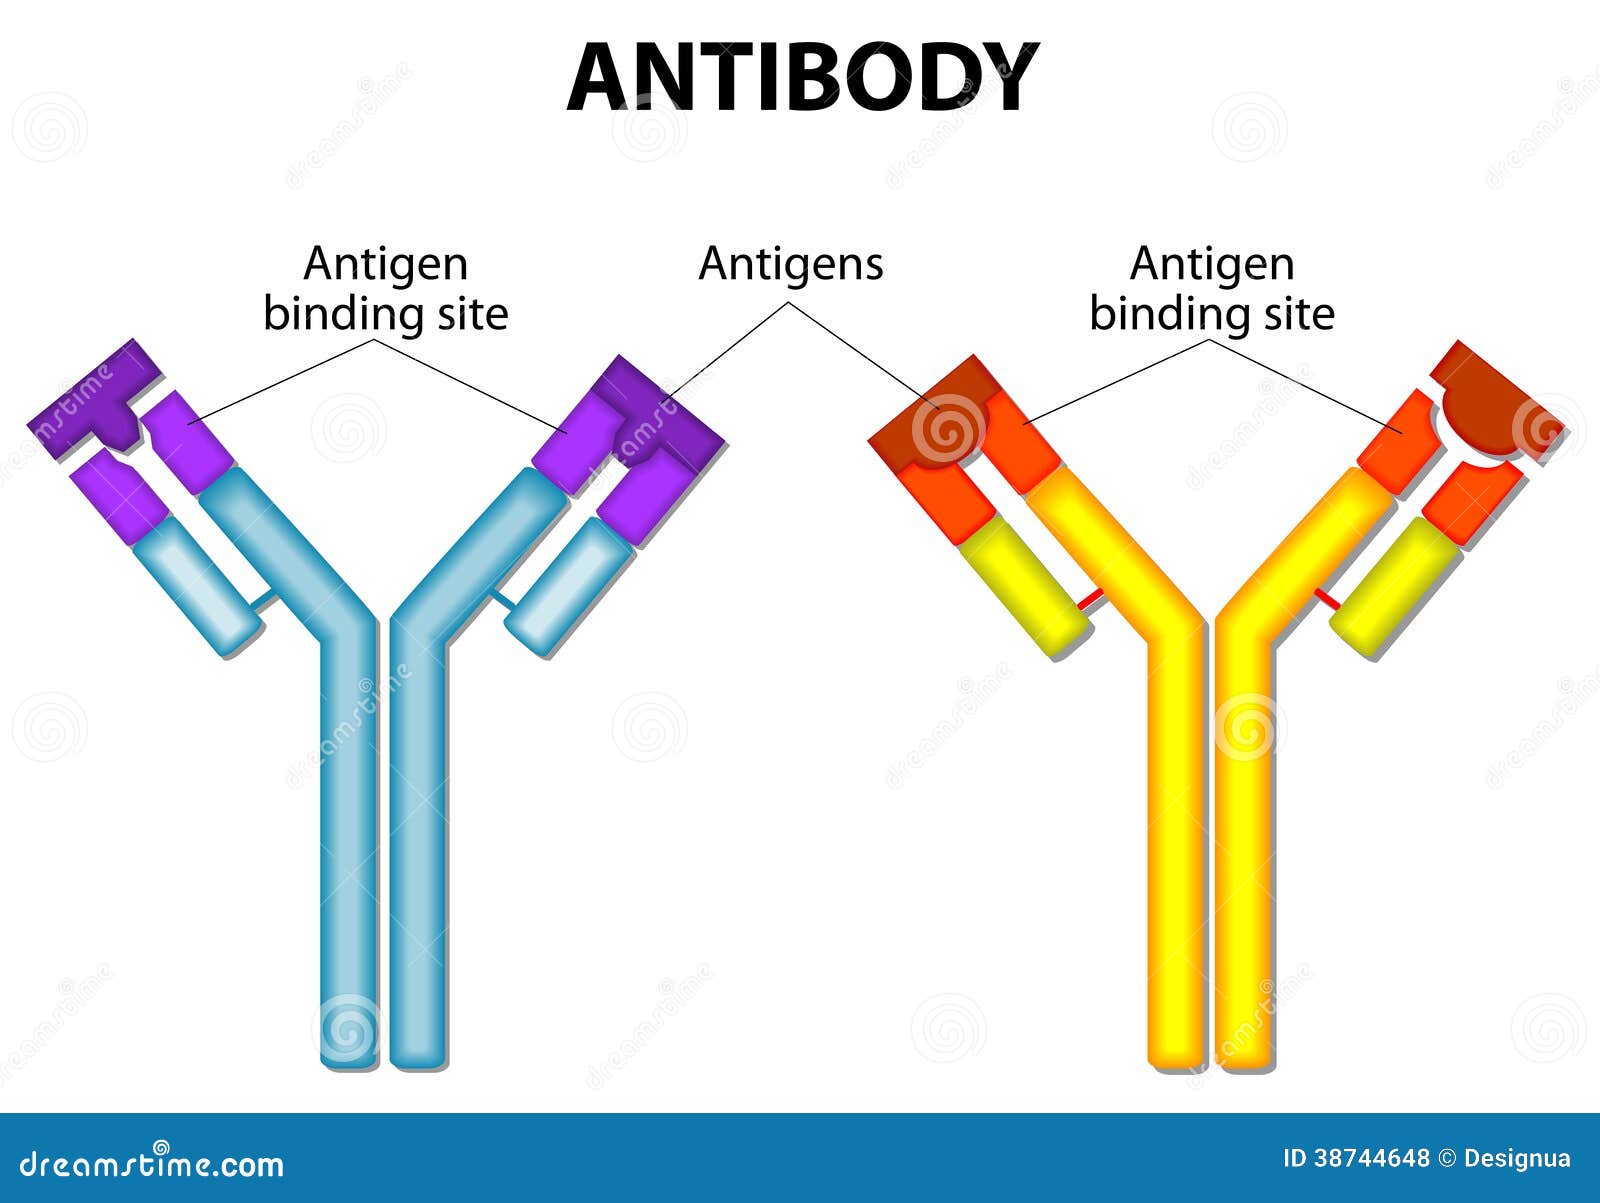 antibody and antigen